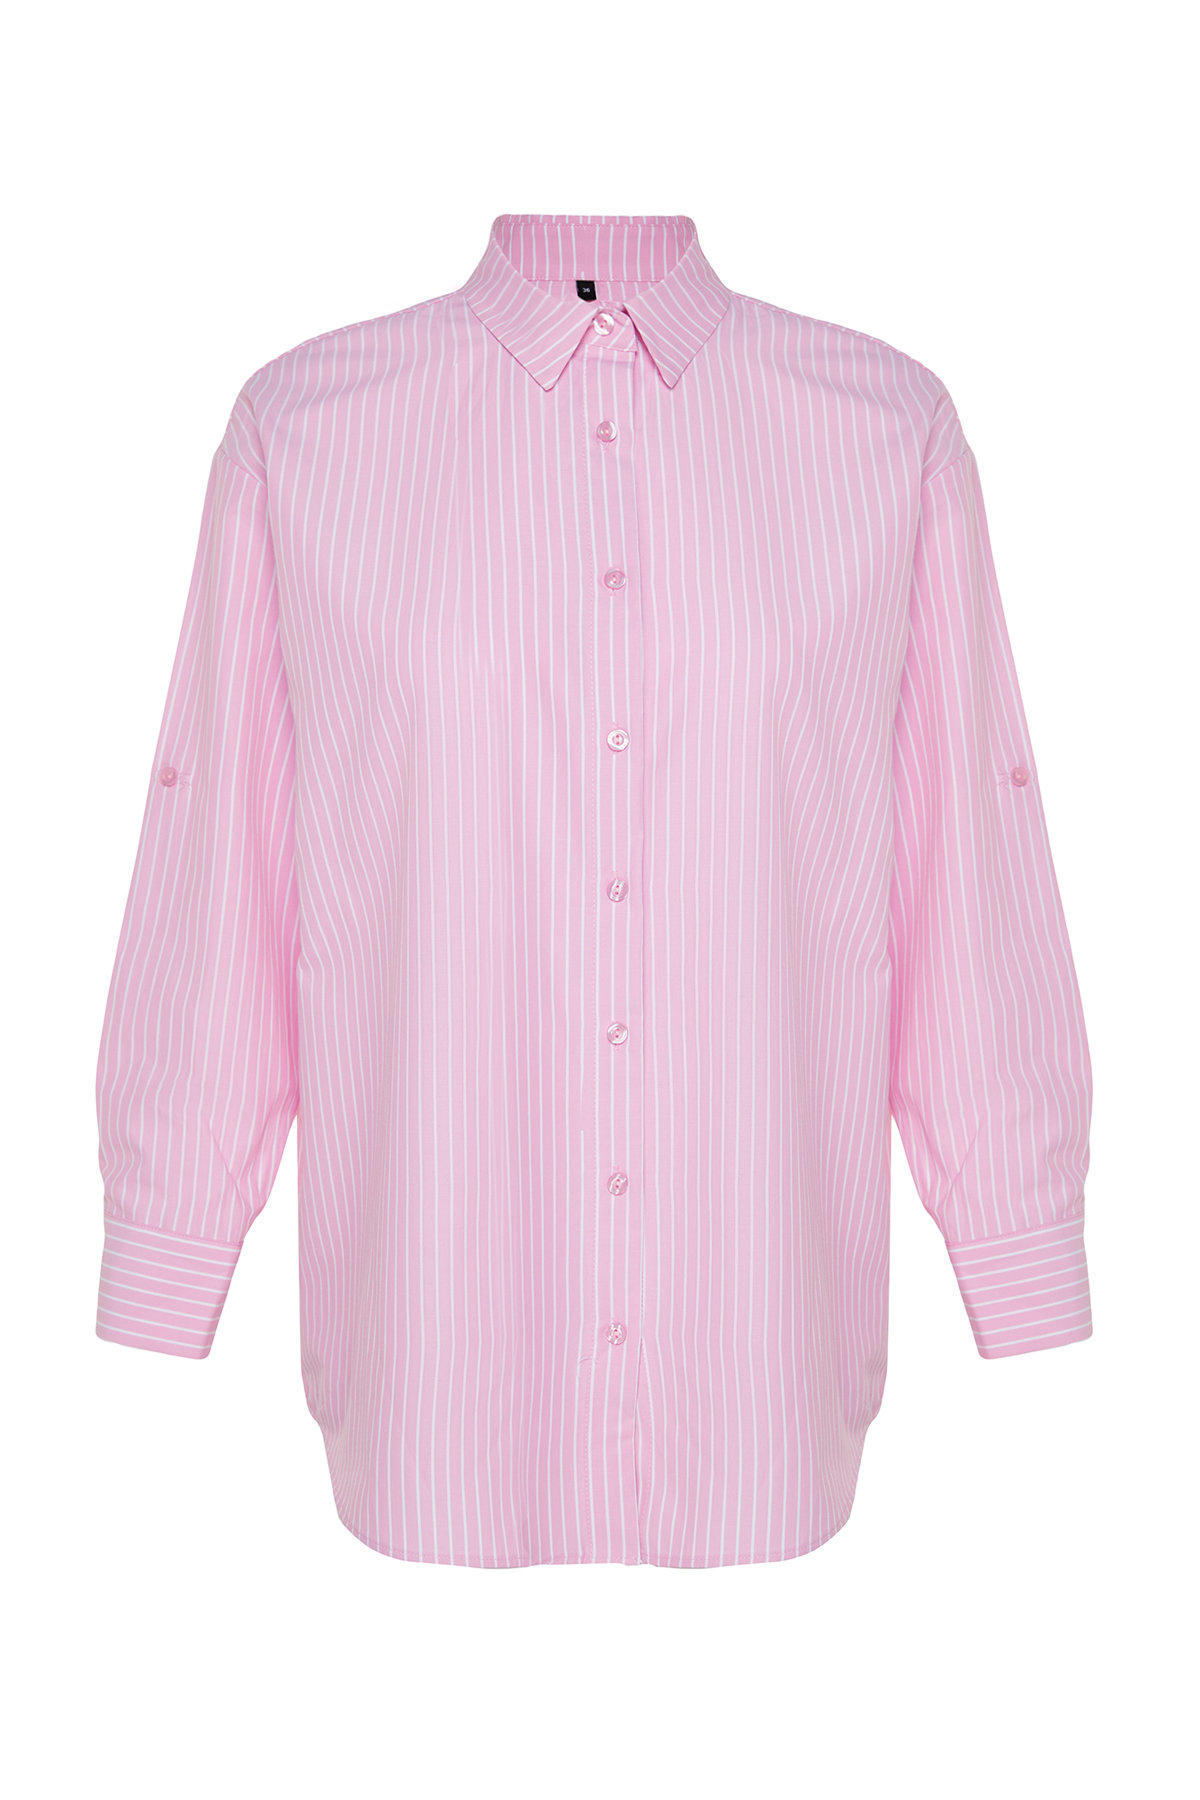 Полосатая тканая рубашка Trendyol, розовый полосатая рубашка оверсайз trendyol белый